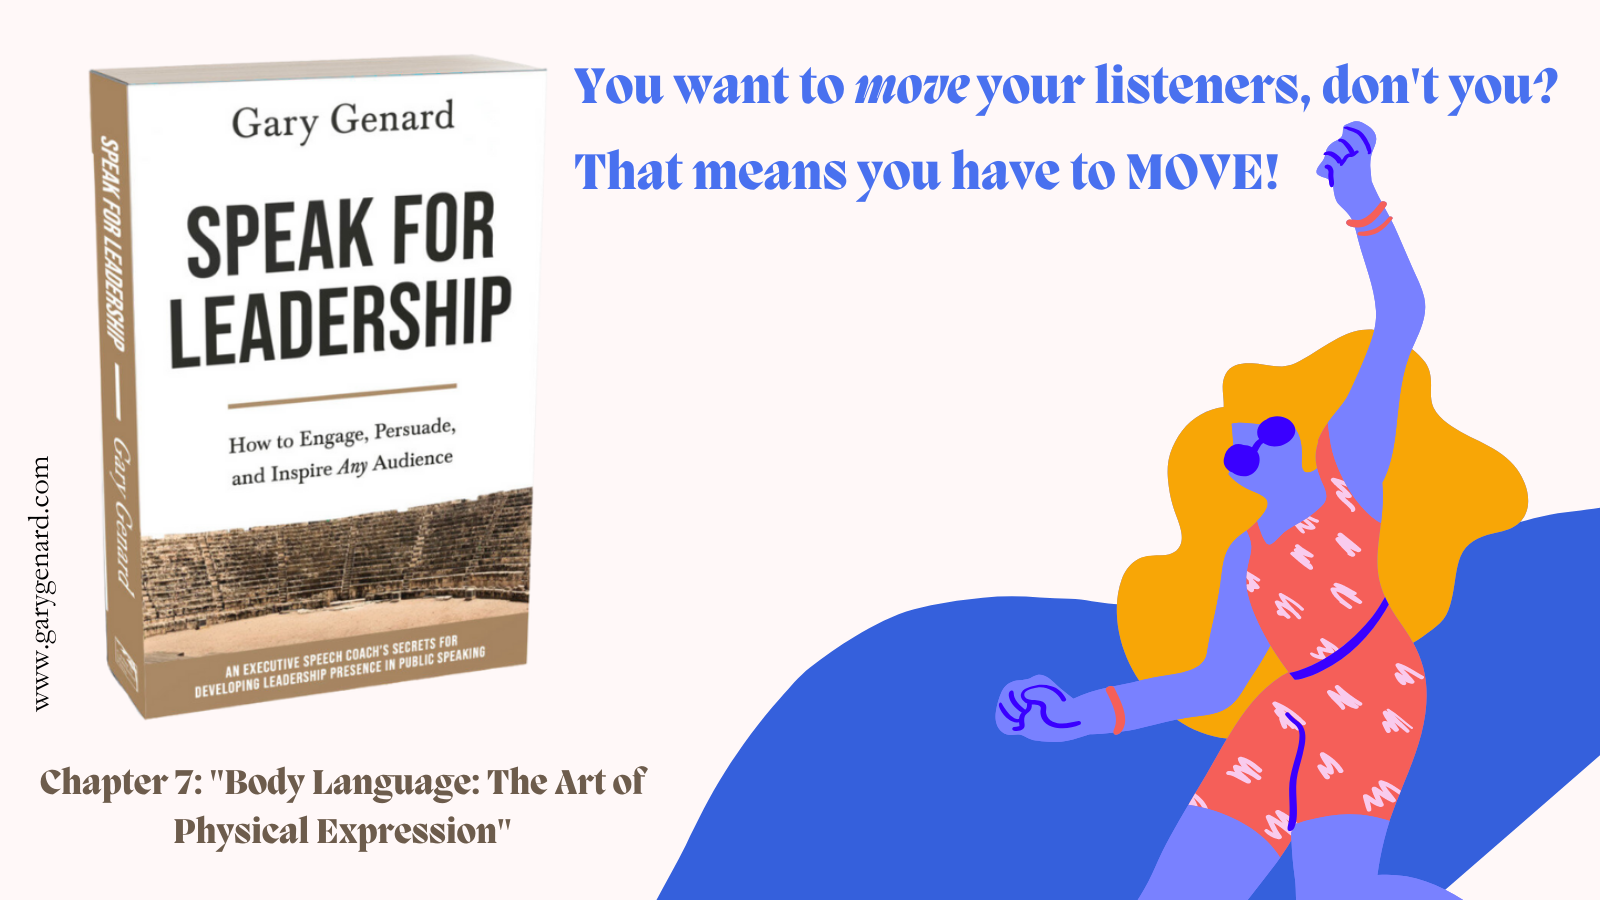 Dr. Gary Genard's book on leadership presence, Speak for Leadership.